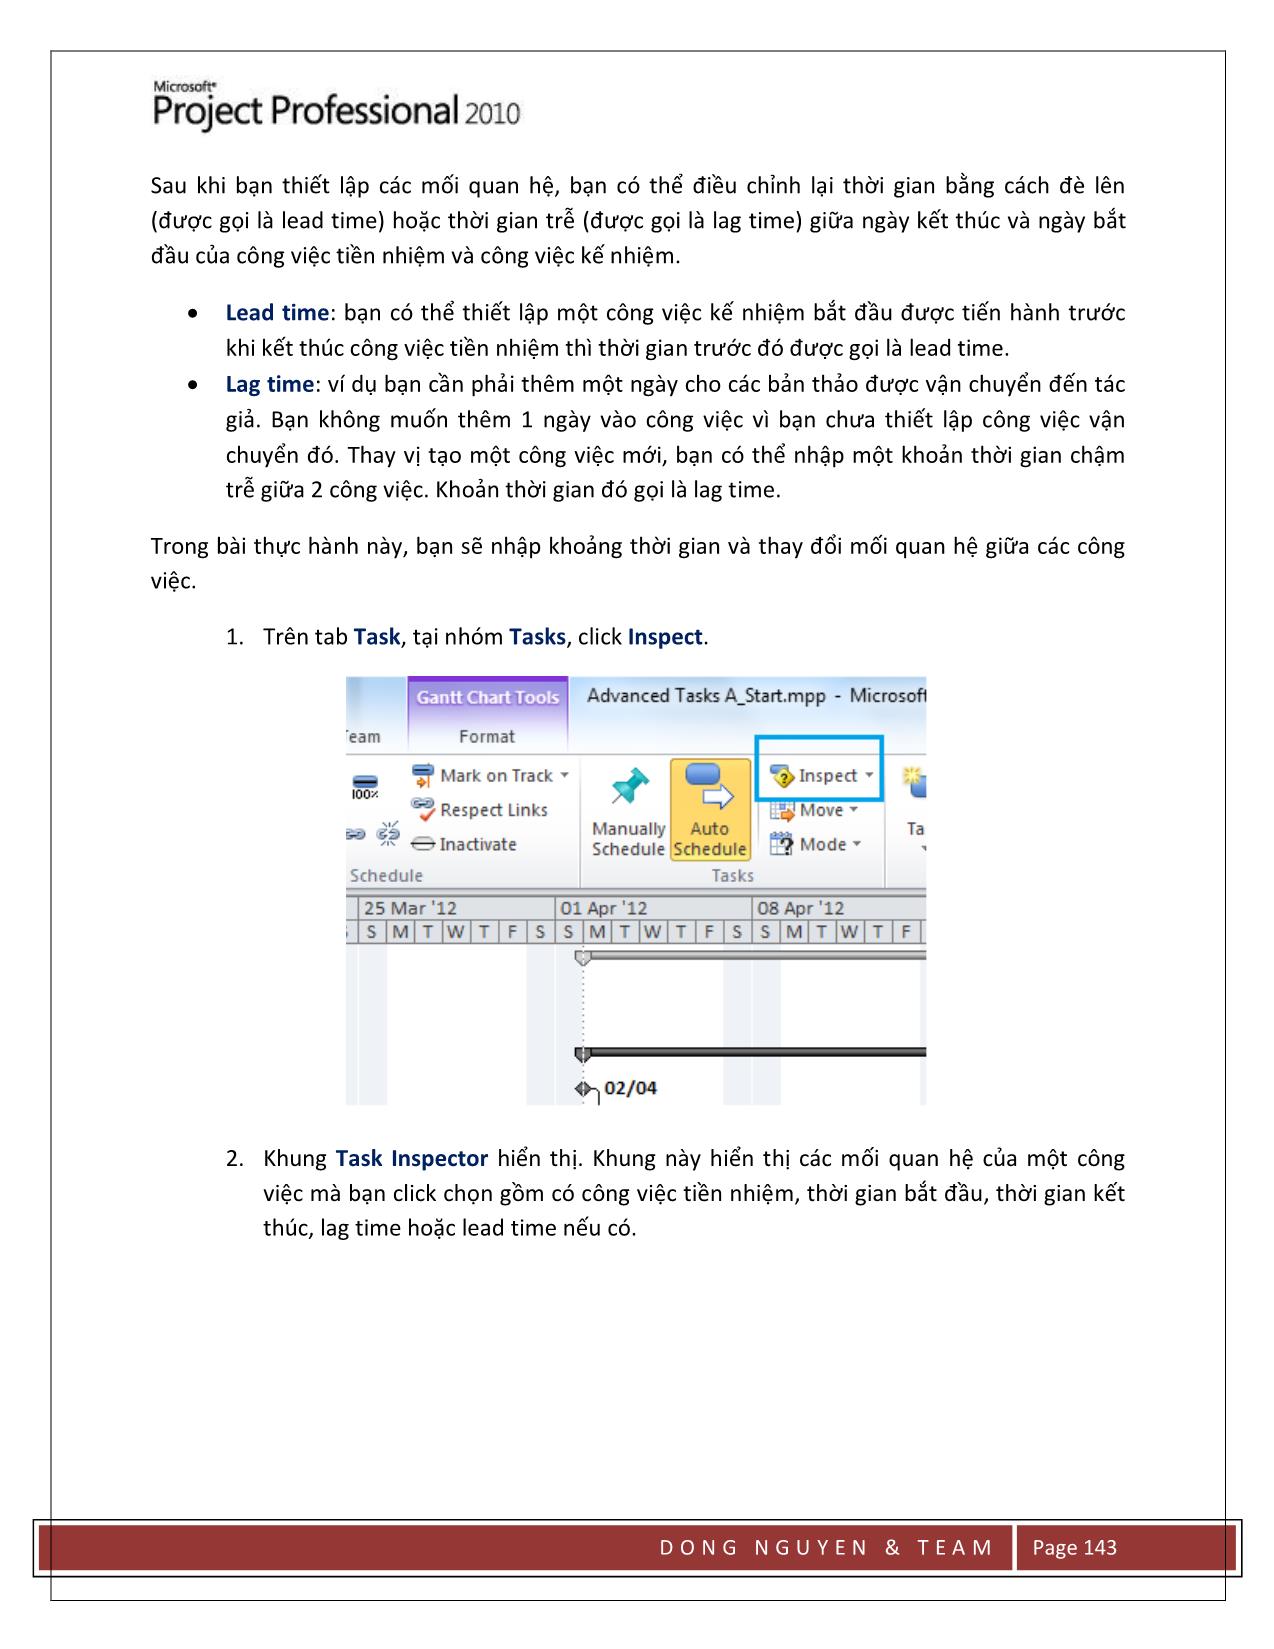 Microsoft Project 2010 - Phần 2 trang 3